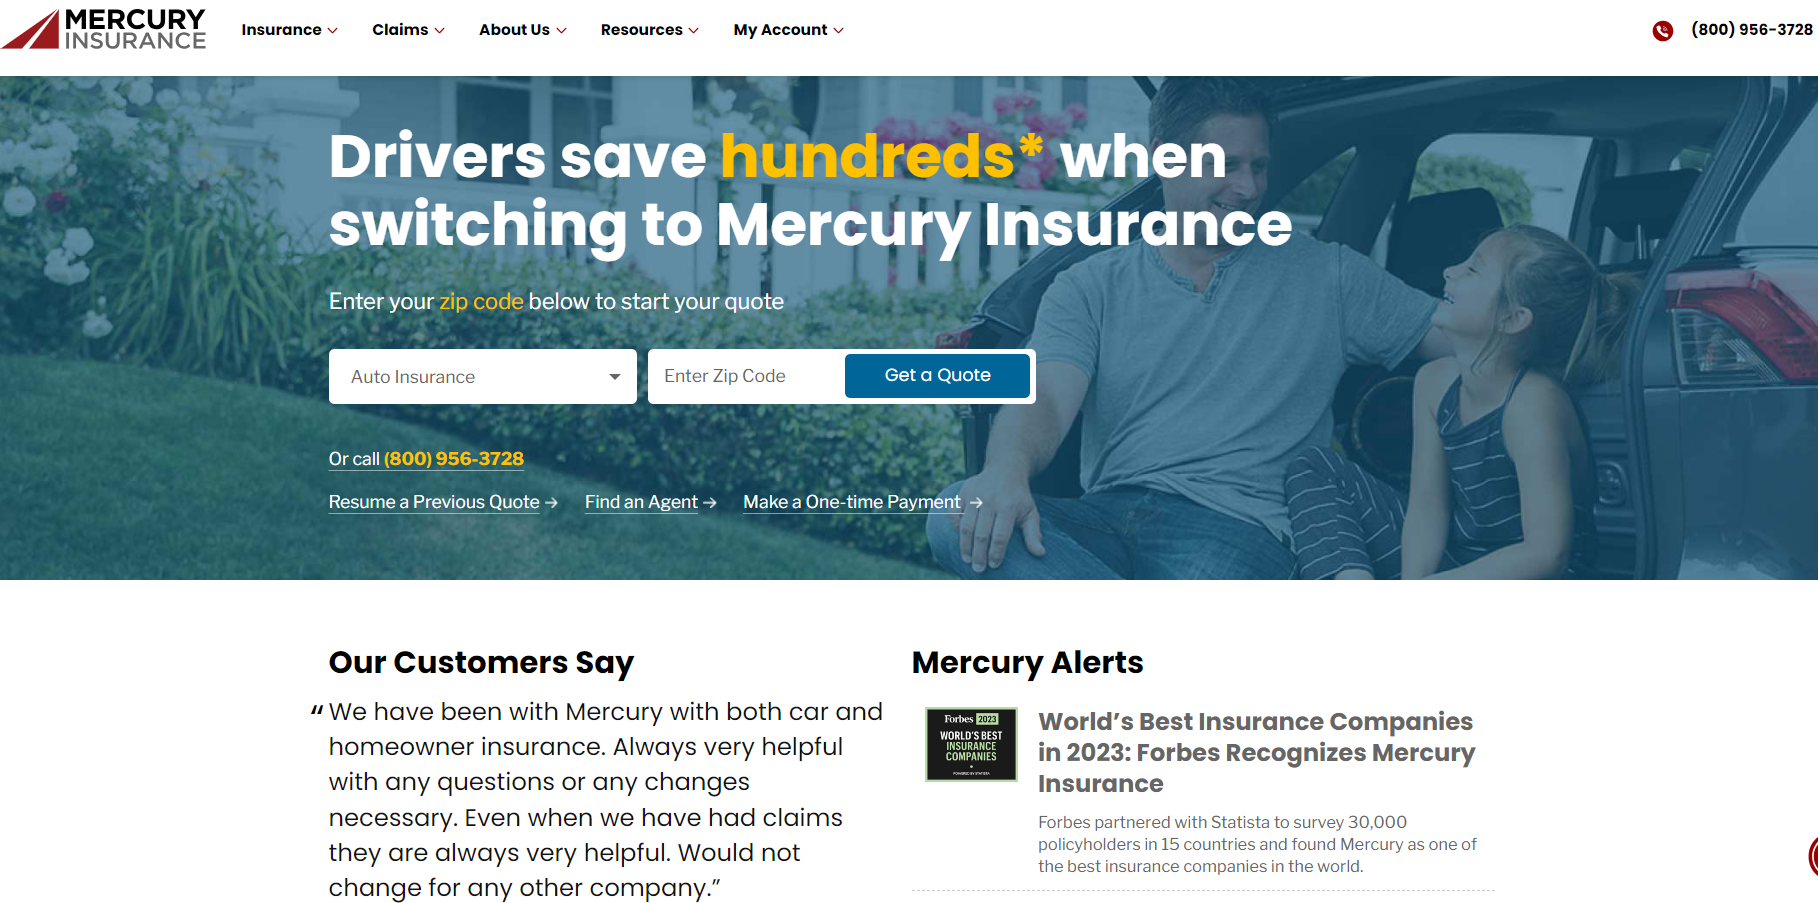 Mercury: Cheap Auto Insurance for DoorDash Drivers